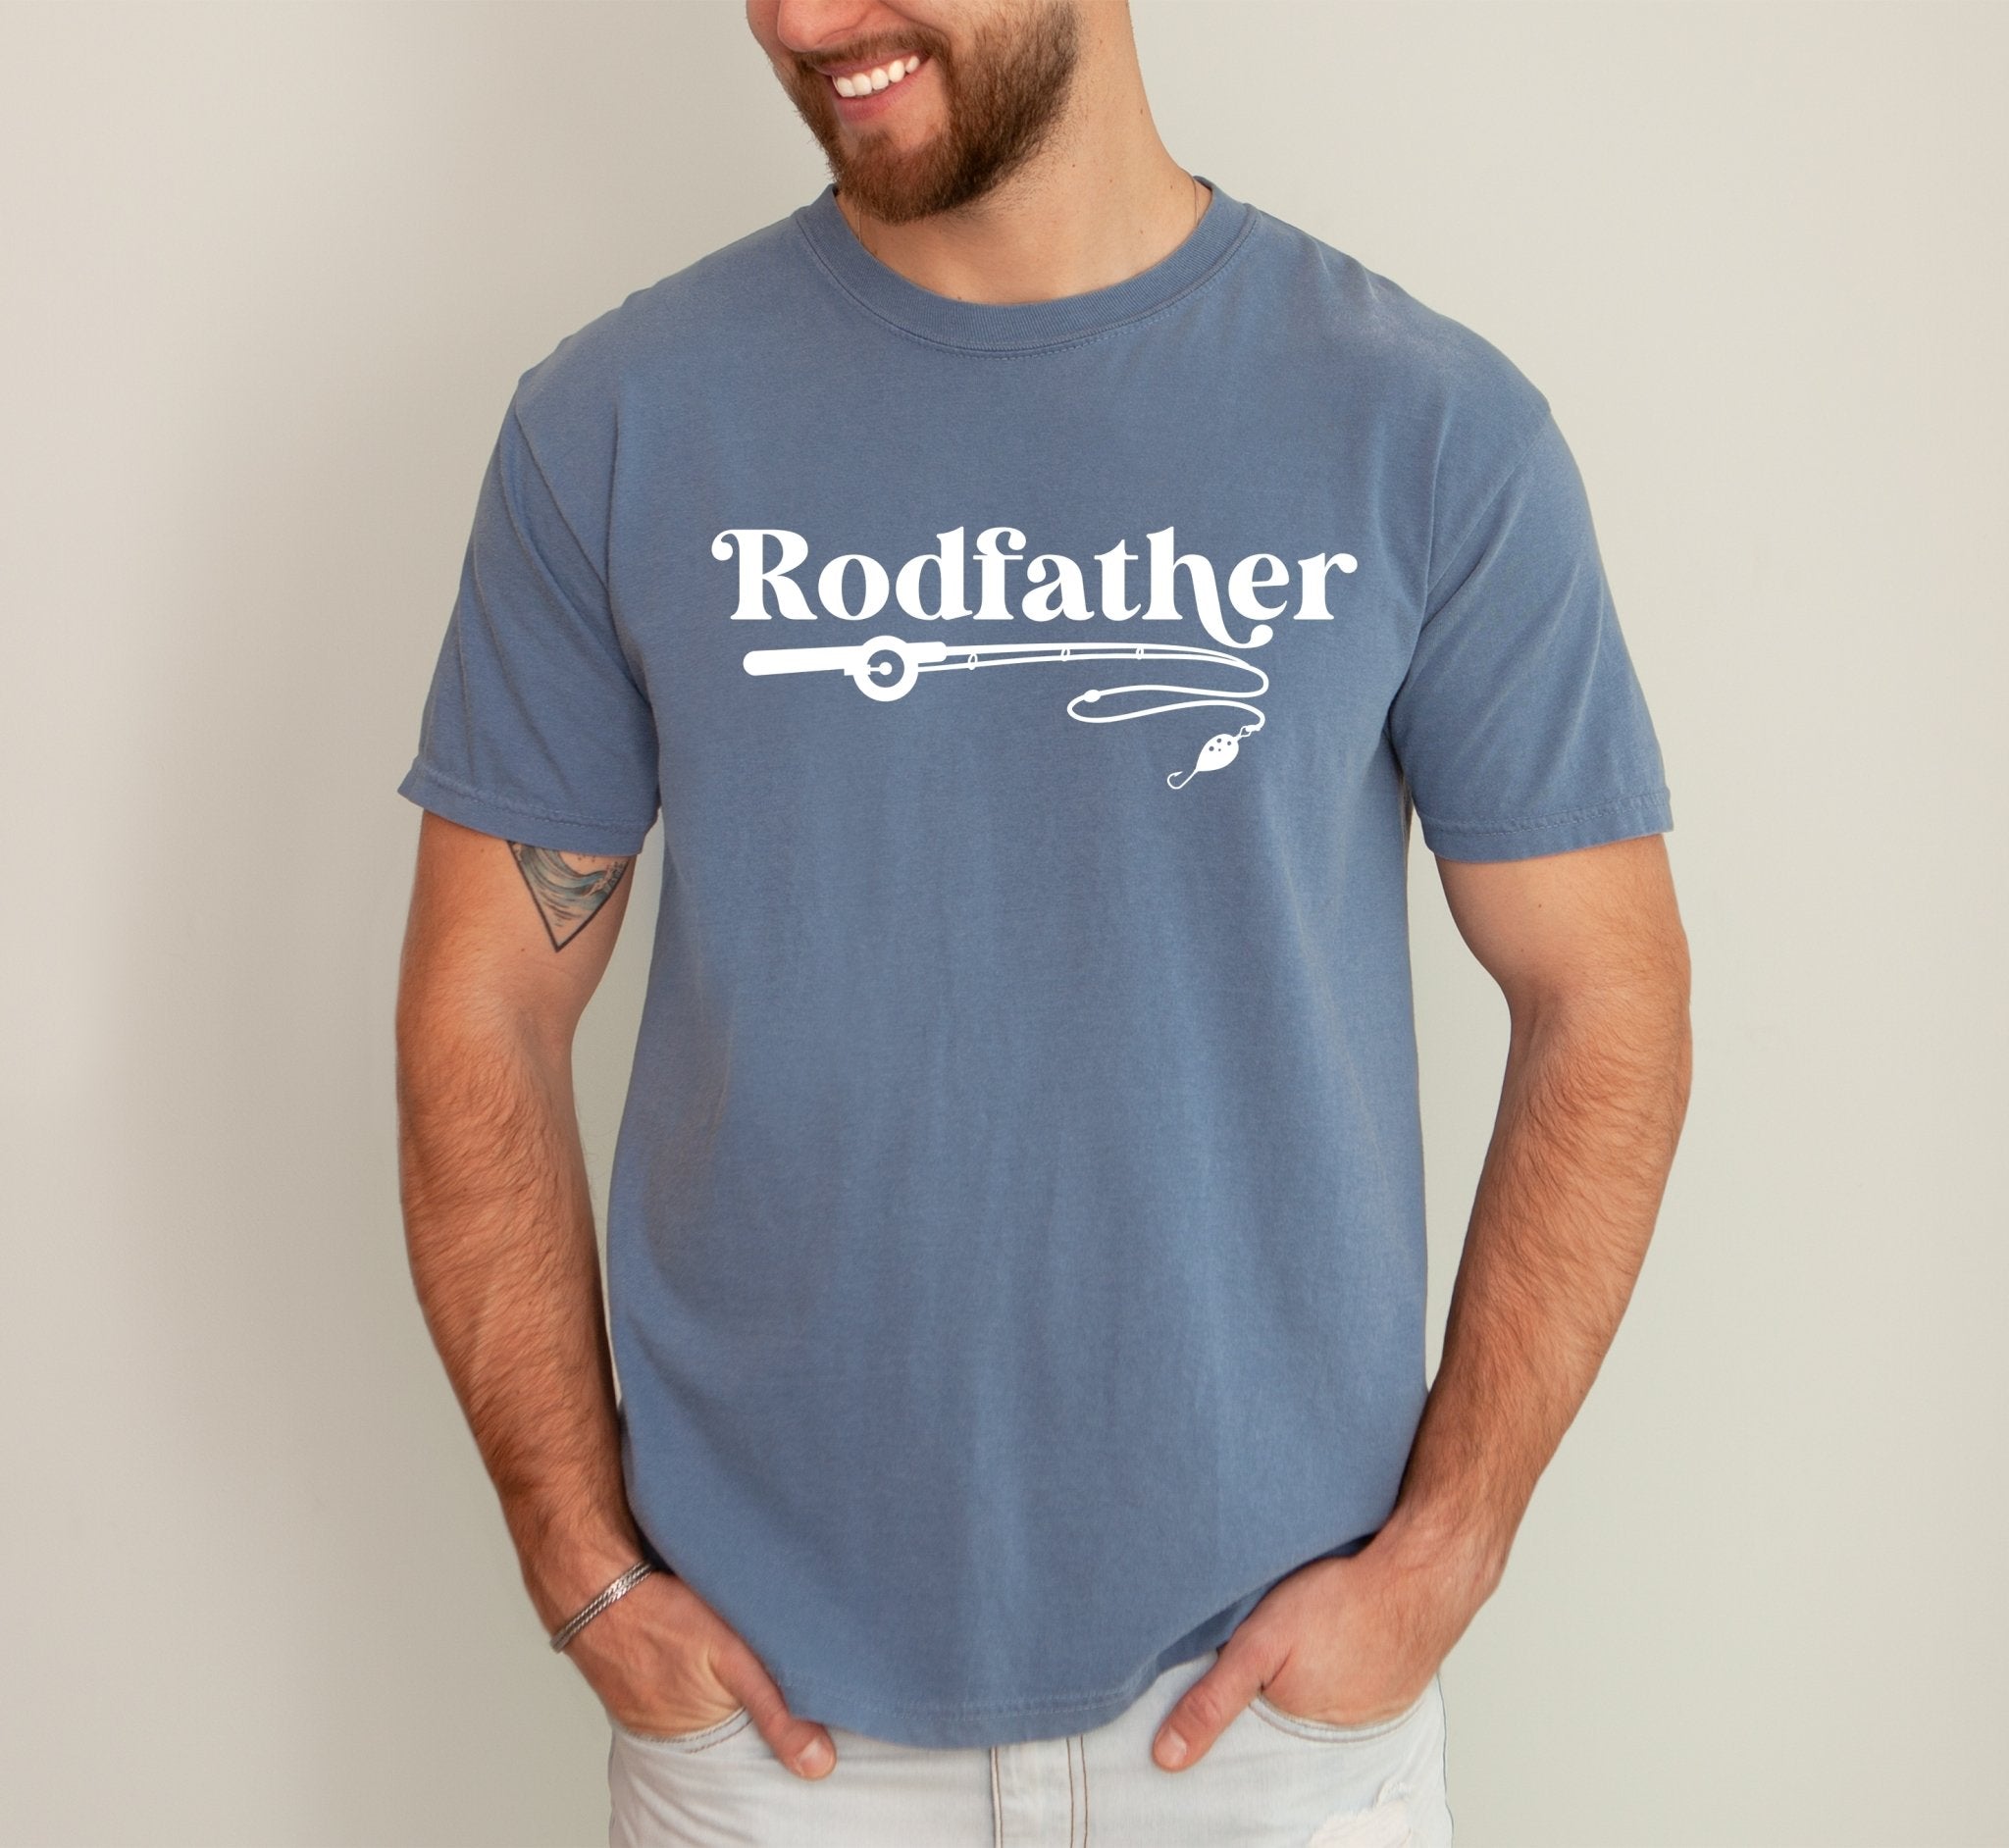 The Rodfather Tee - UntamedEgo LLC.